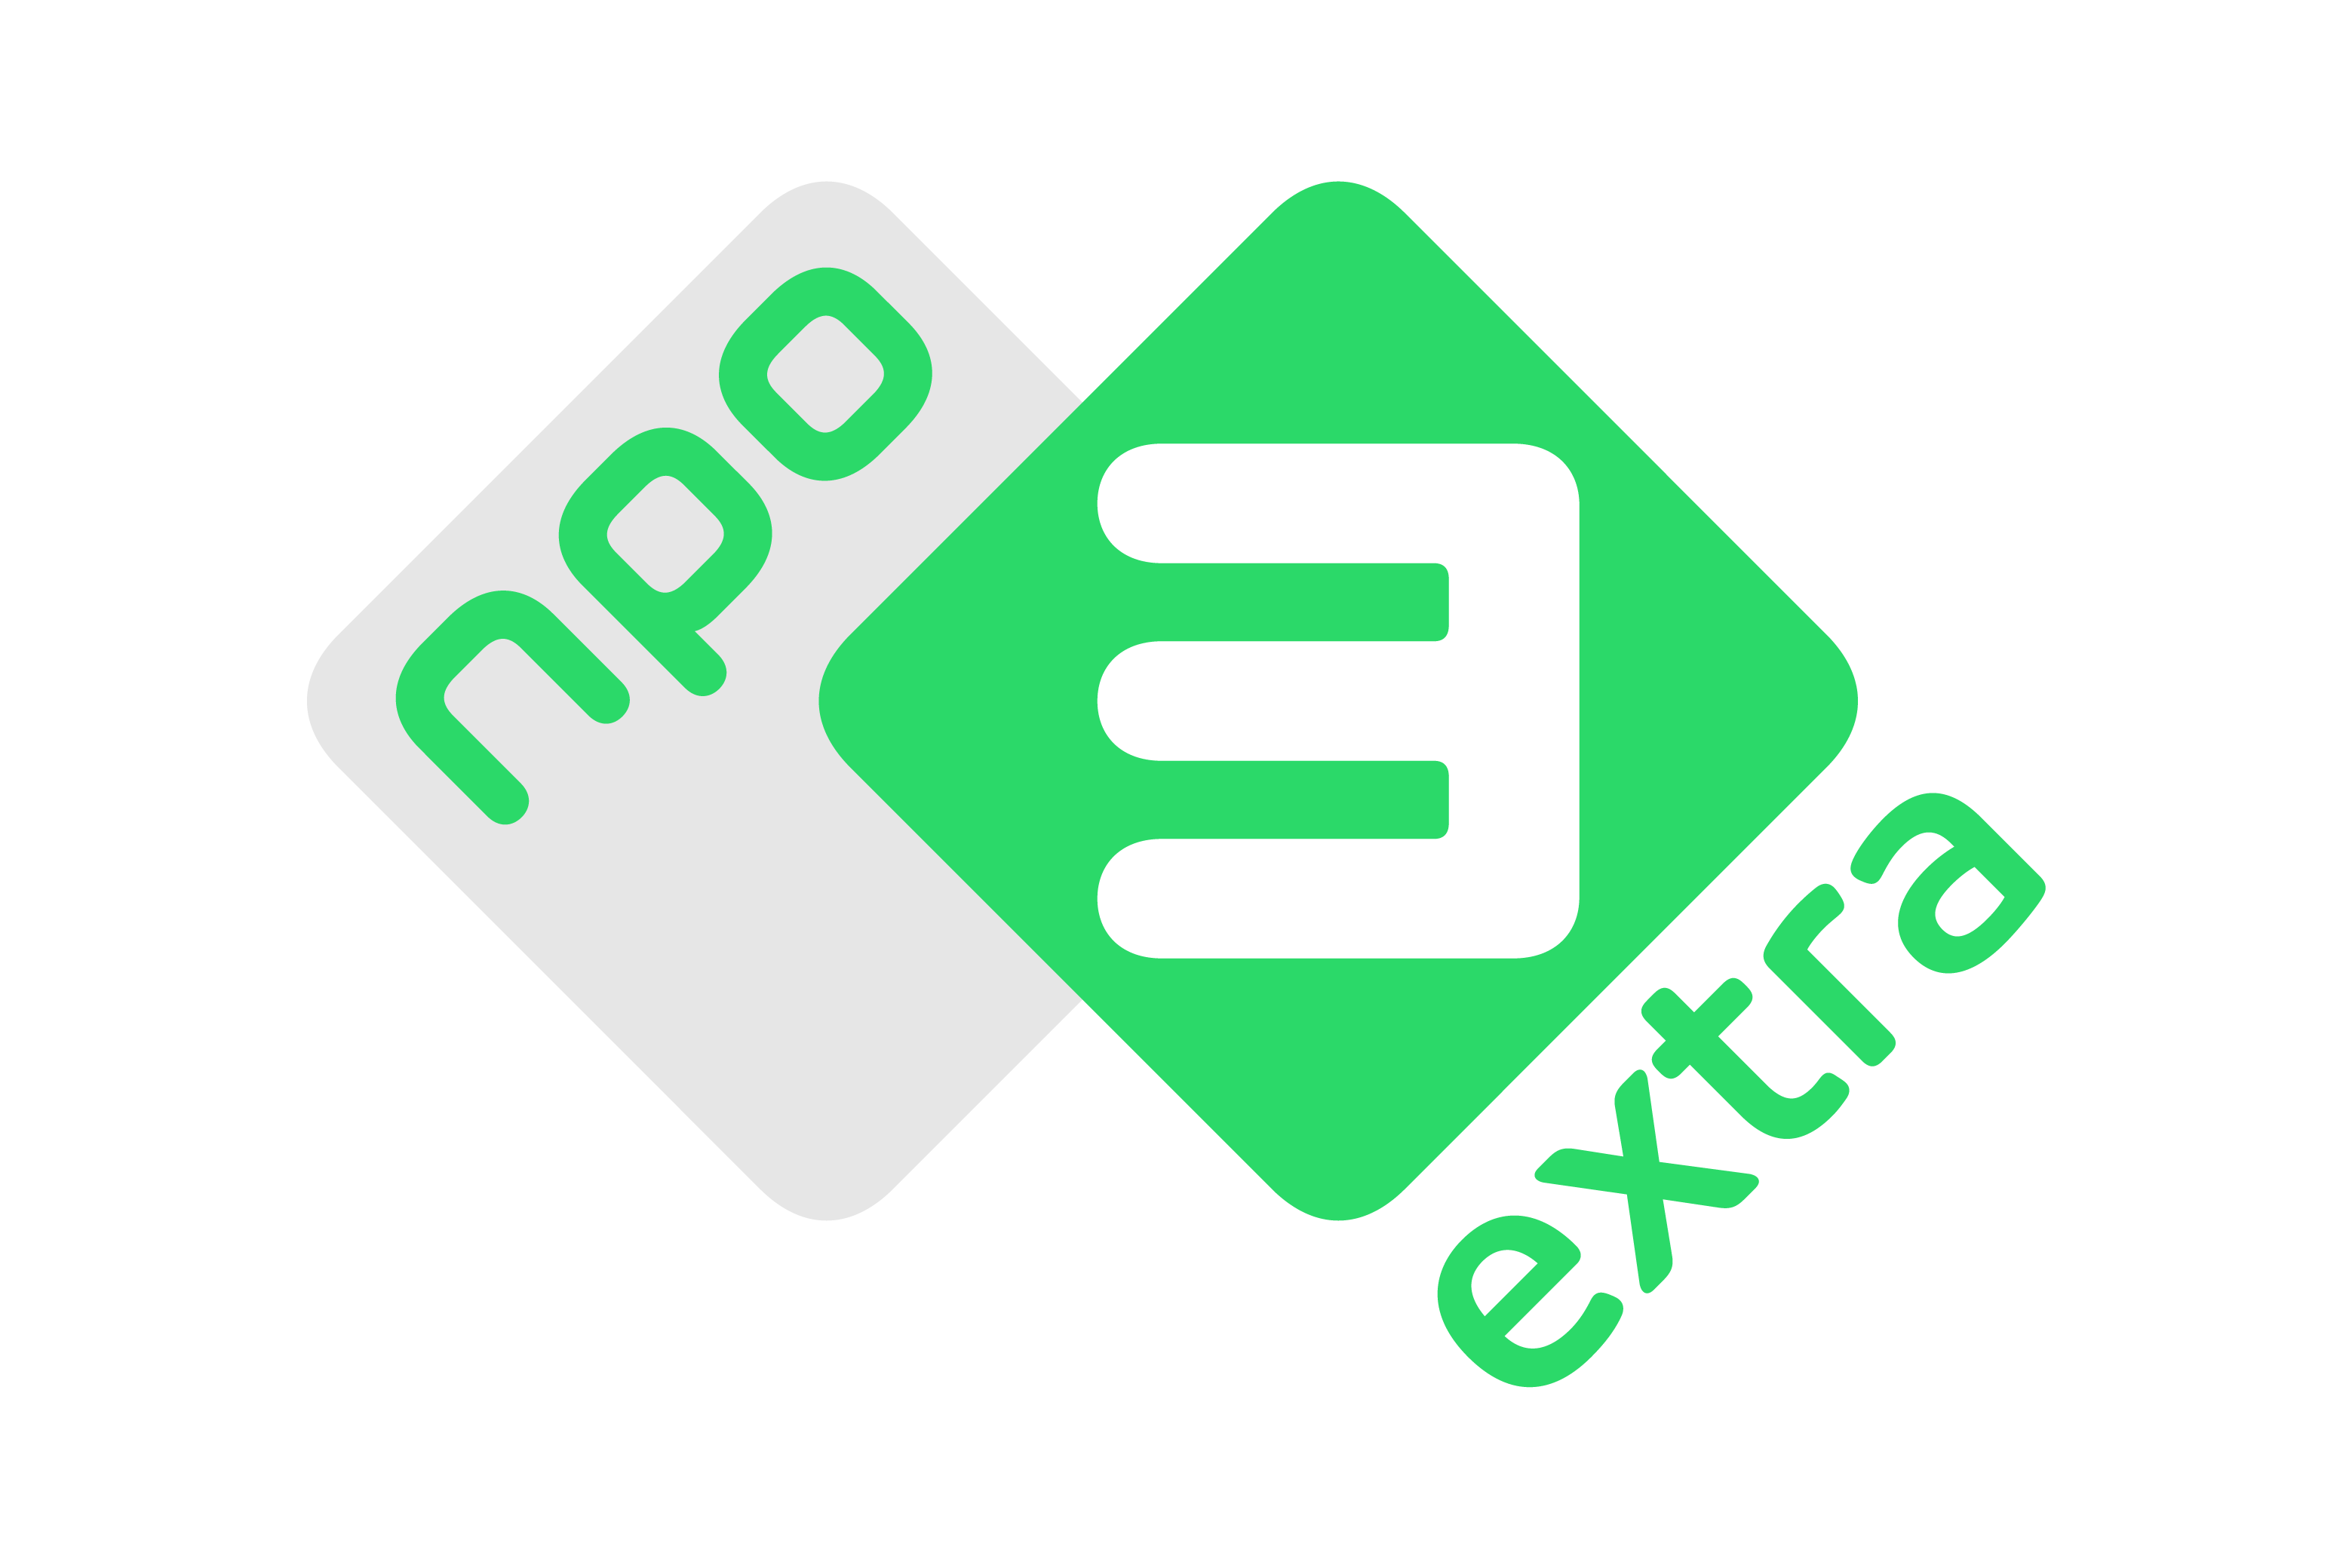 NPO Logo - NPO 3 Extra logo 2018.png